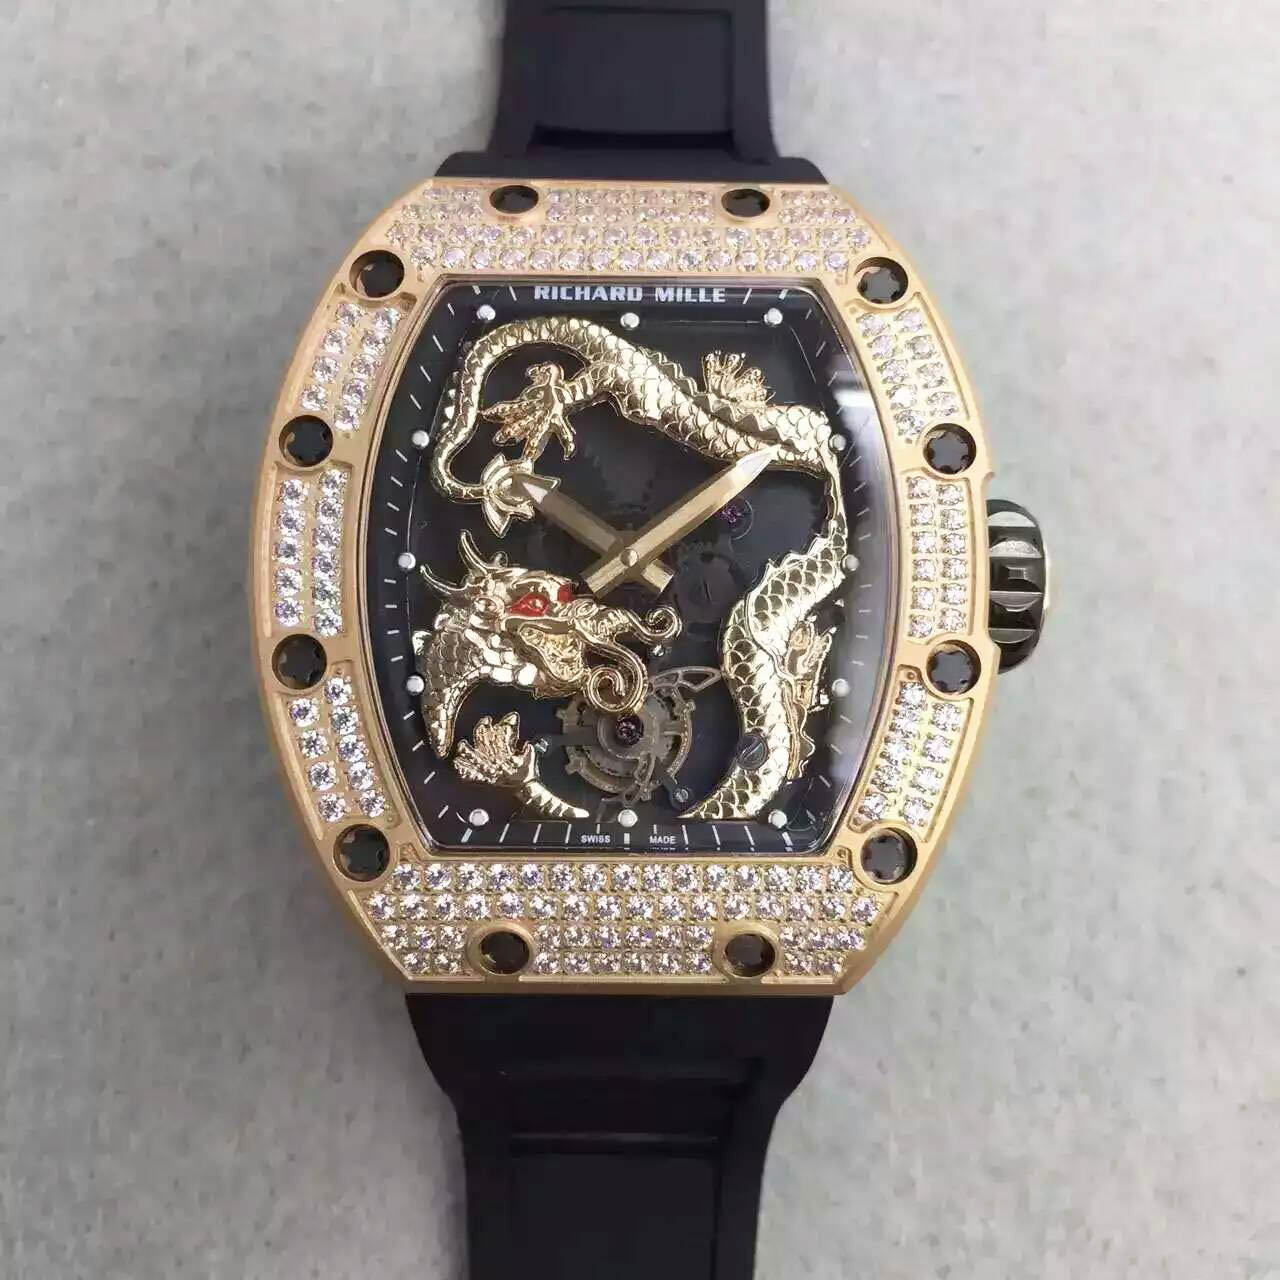 3A查理德米勒 Richard Mille 中國龍系列 熱門腕錶推薦 1:1手錶